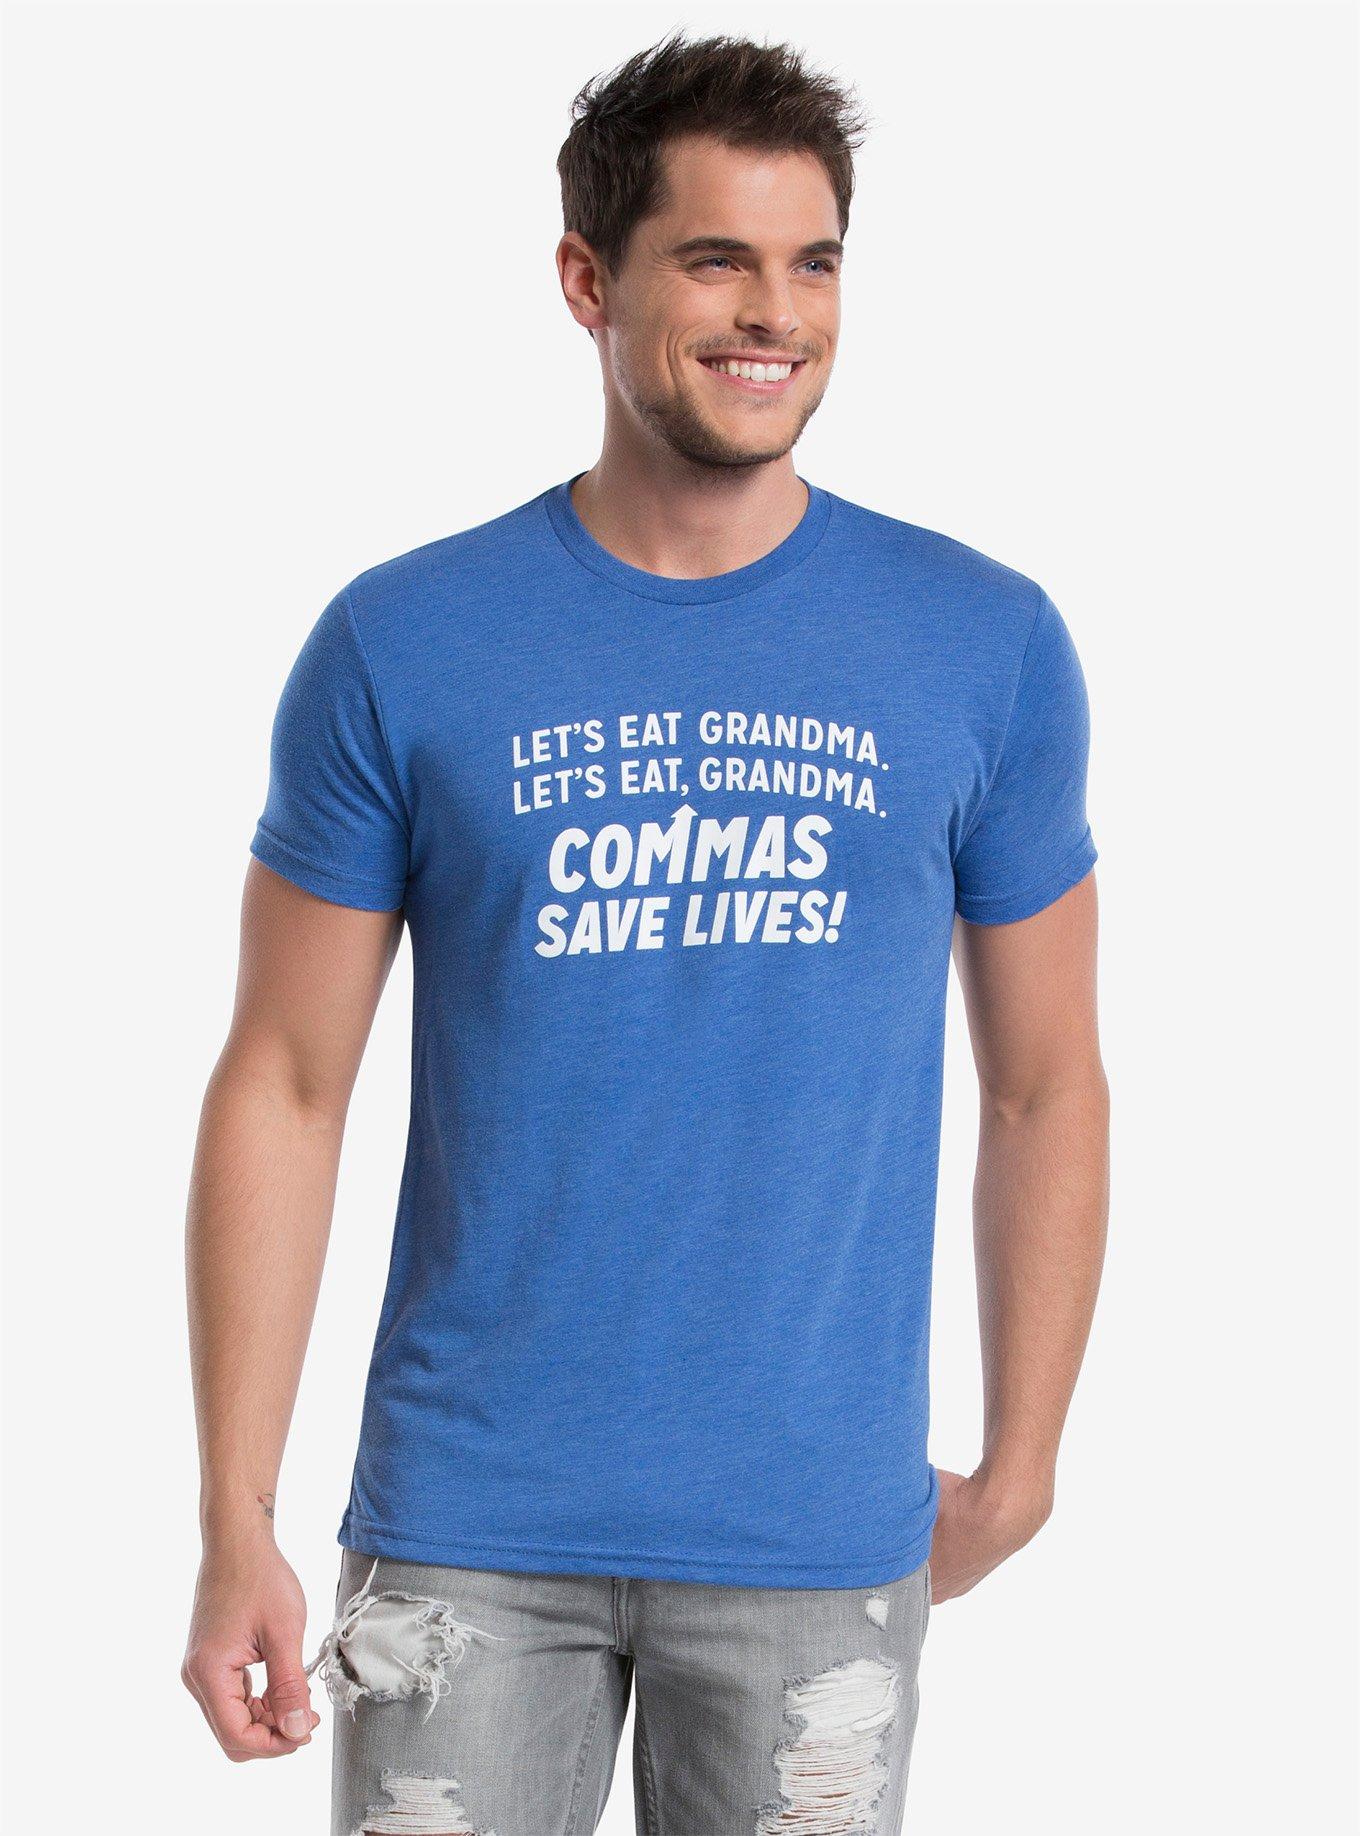 Commas Save Lives! T-Shirt, BLUE, hi-res